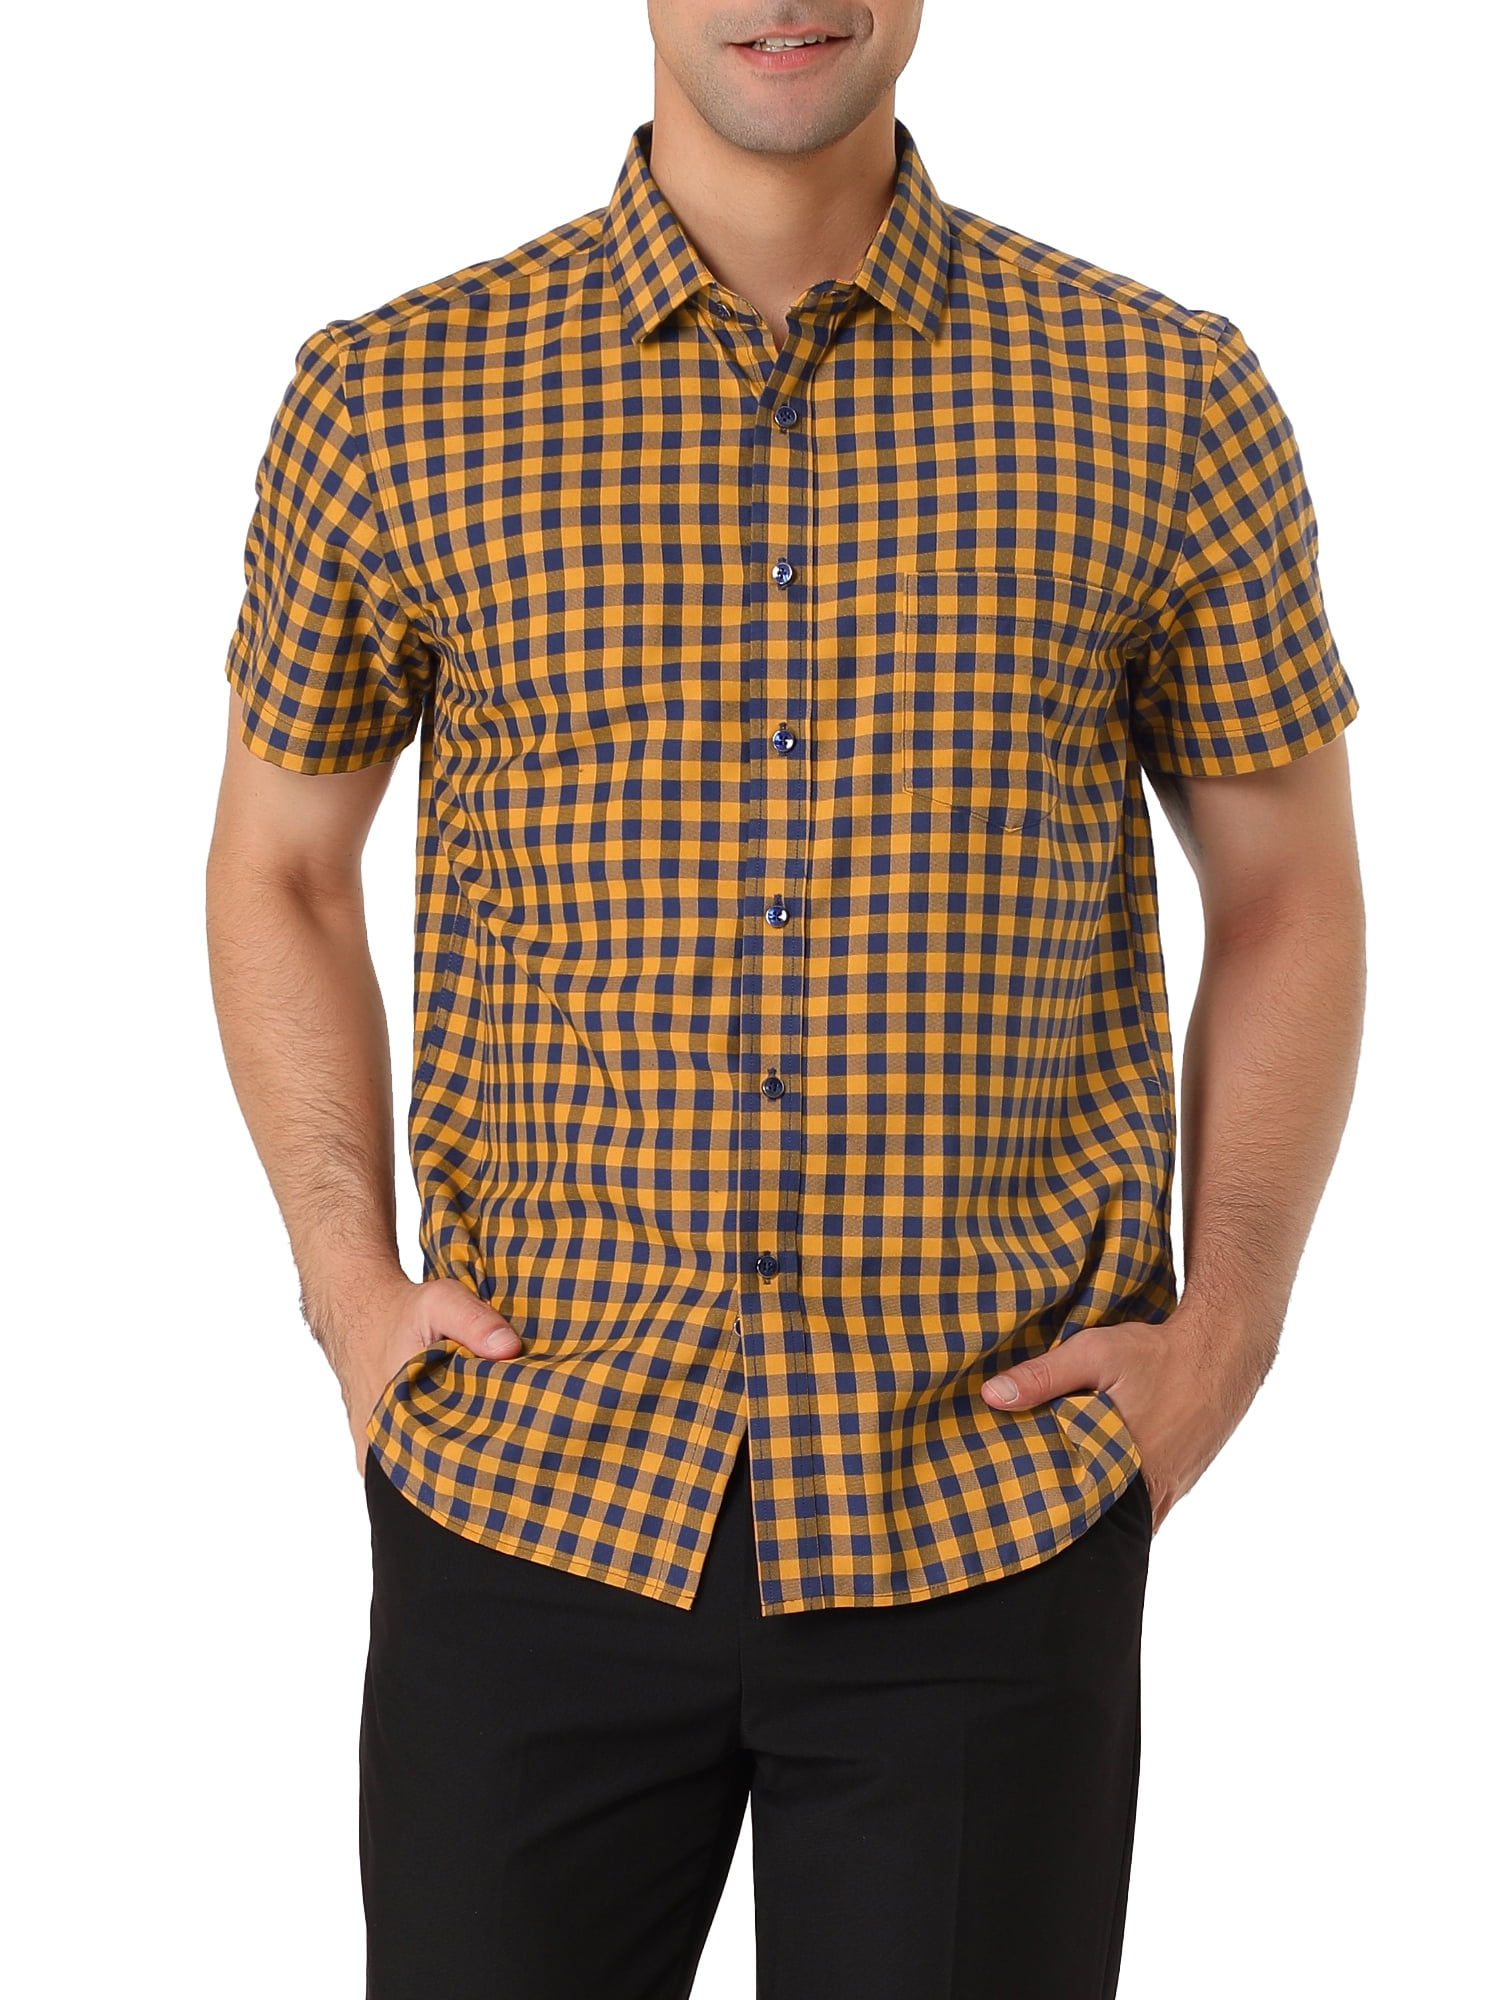 GAGA Men Fashion Short Sleeve Casual Western Plaid Buttons Shirt Button Down Shirts